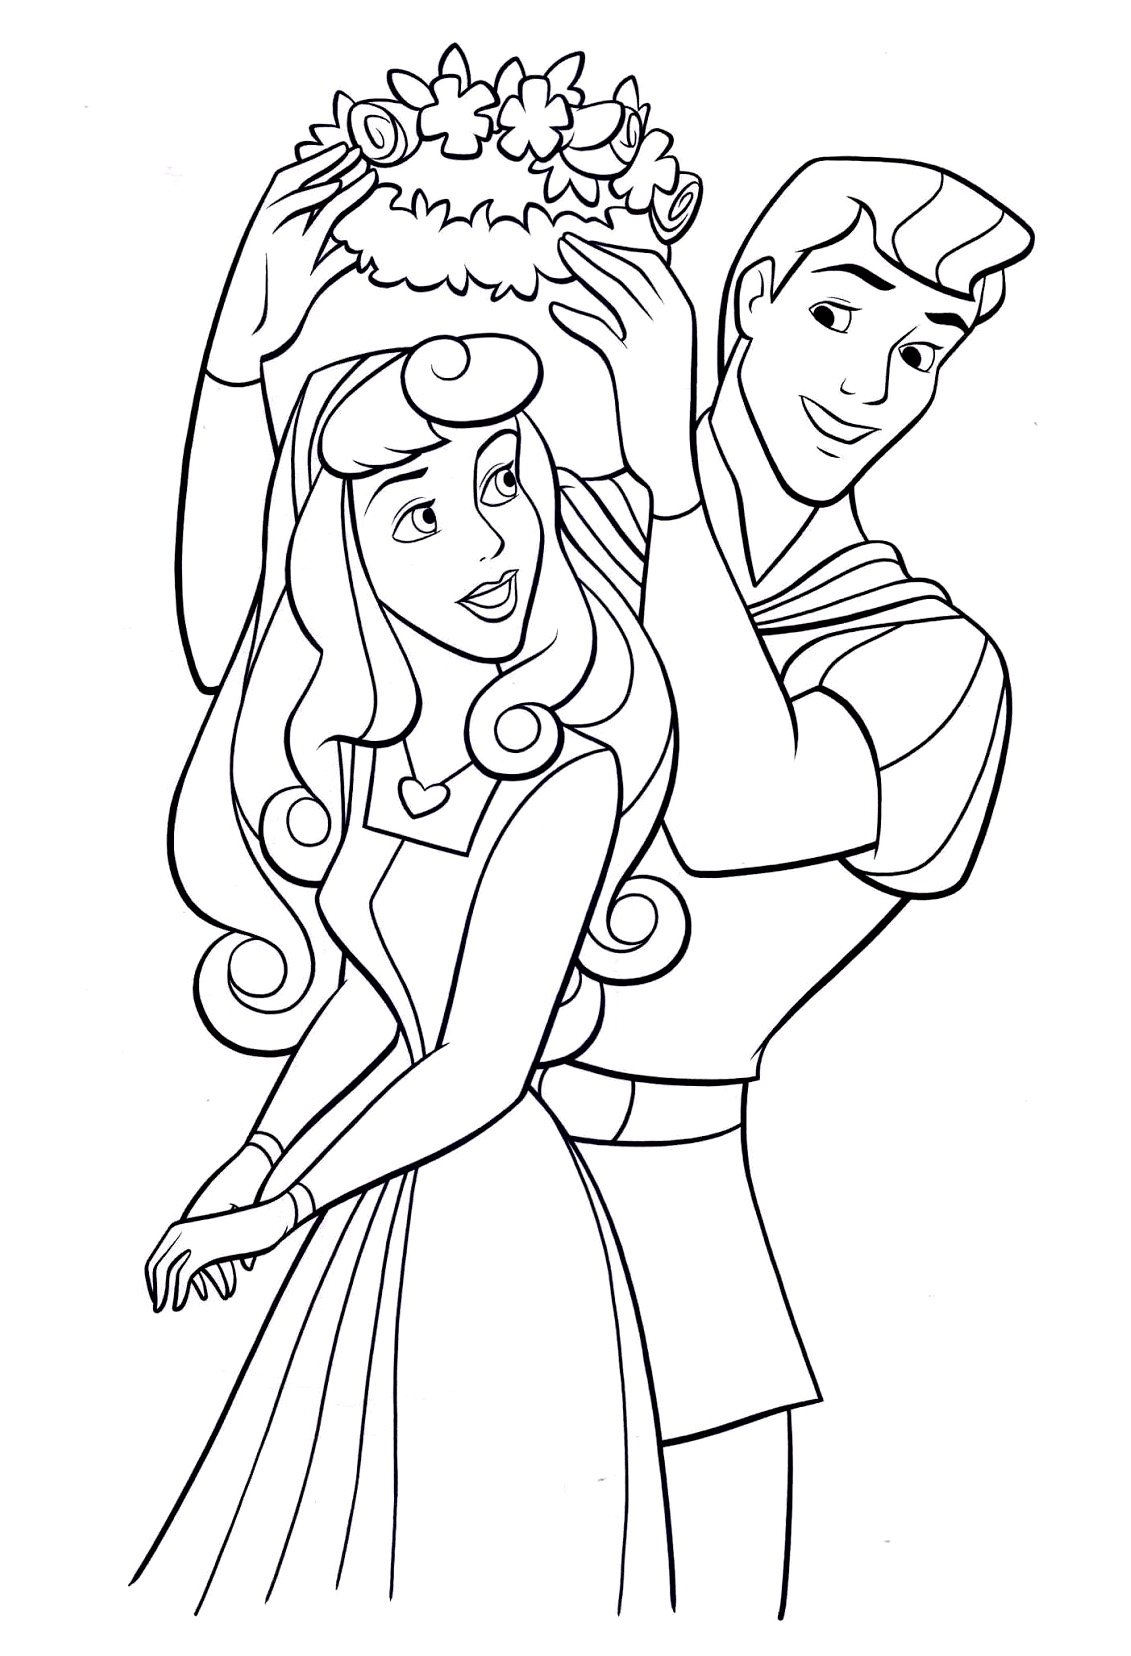 Image of Princess Aurora with her prince